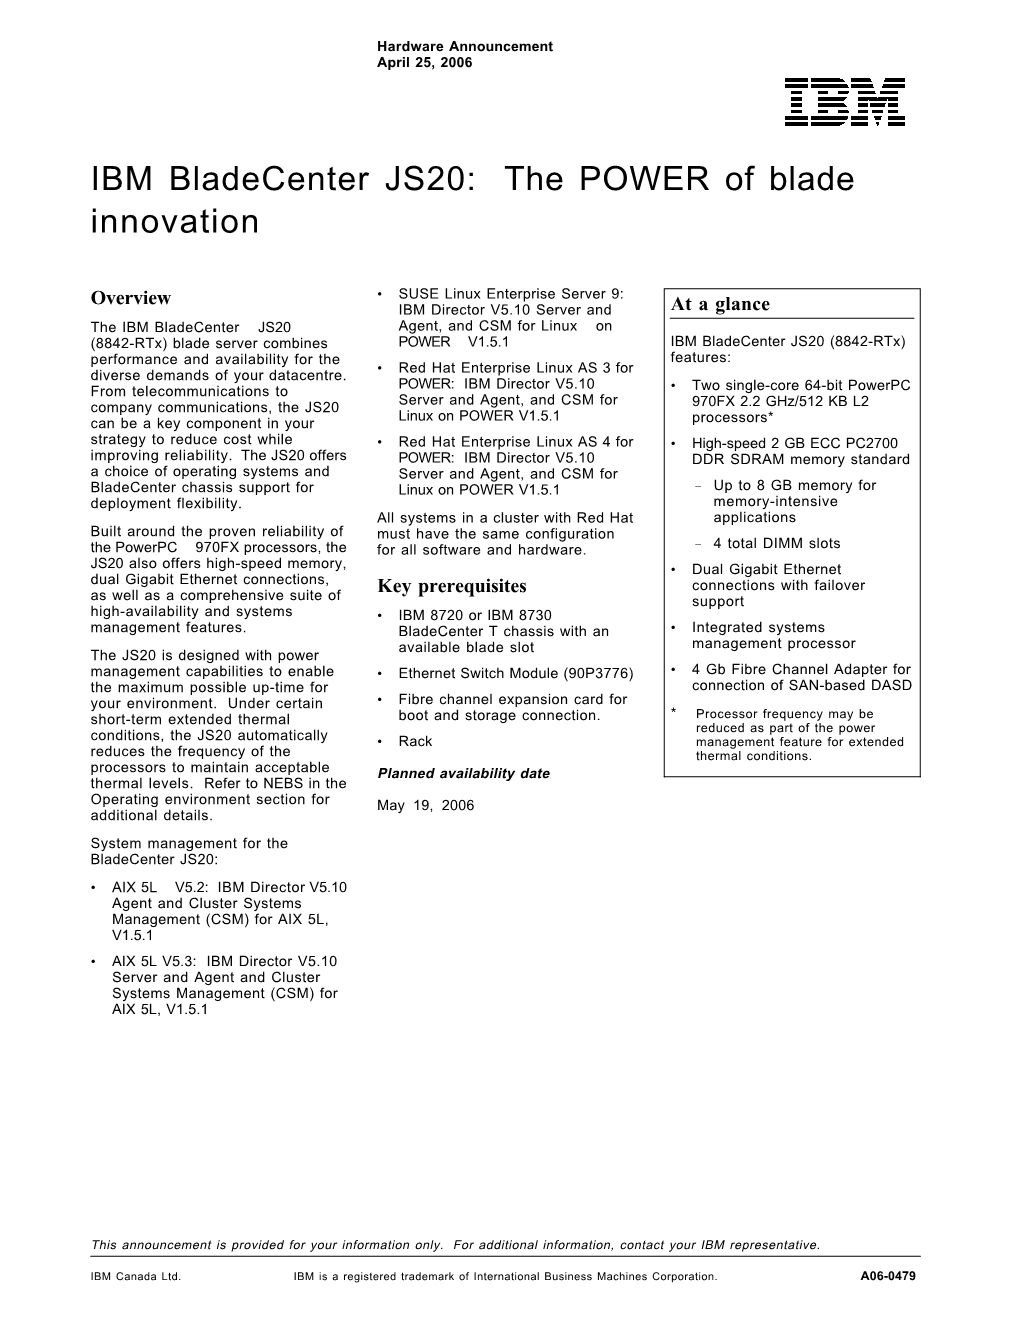 IBM Bladecenter JS20: the POWER of Blade Innovation